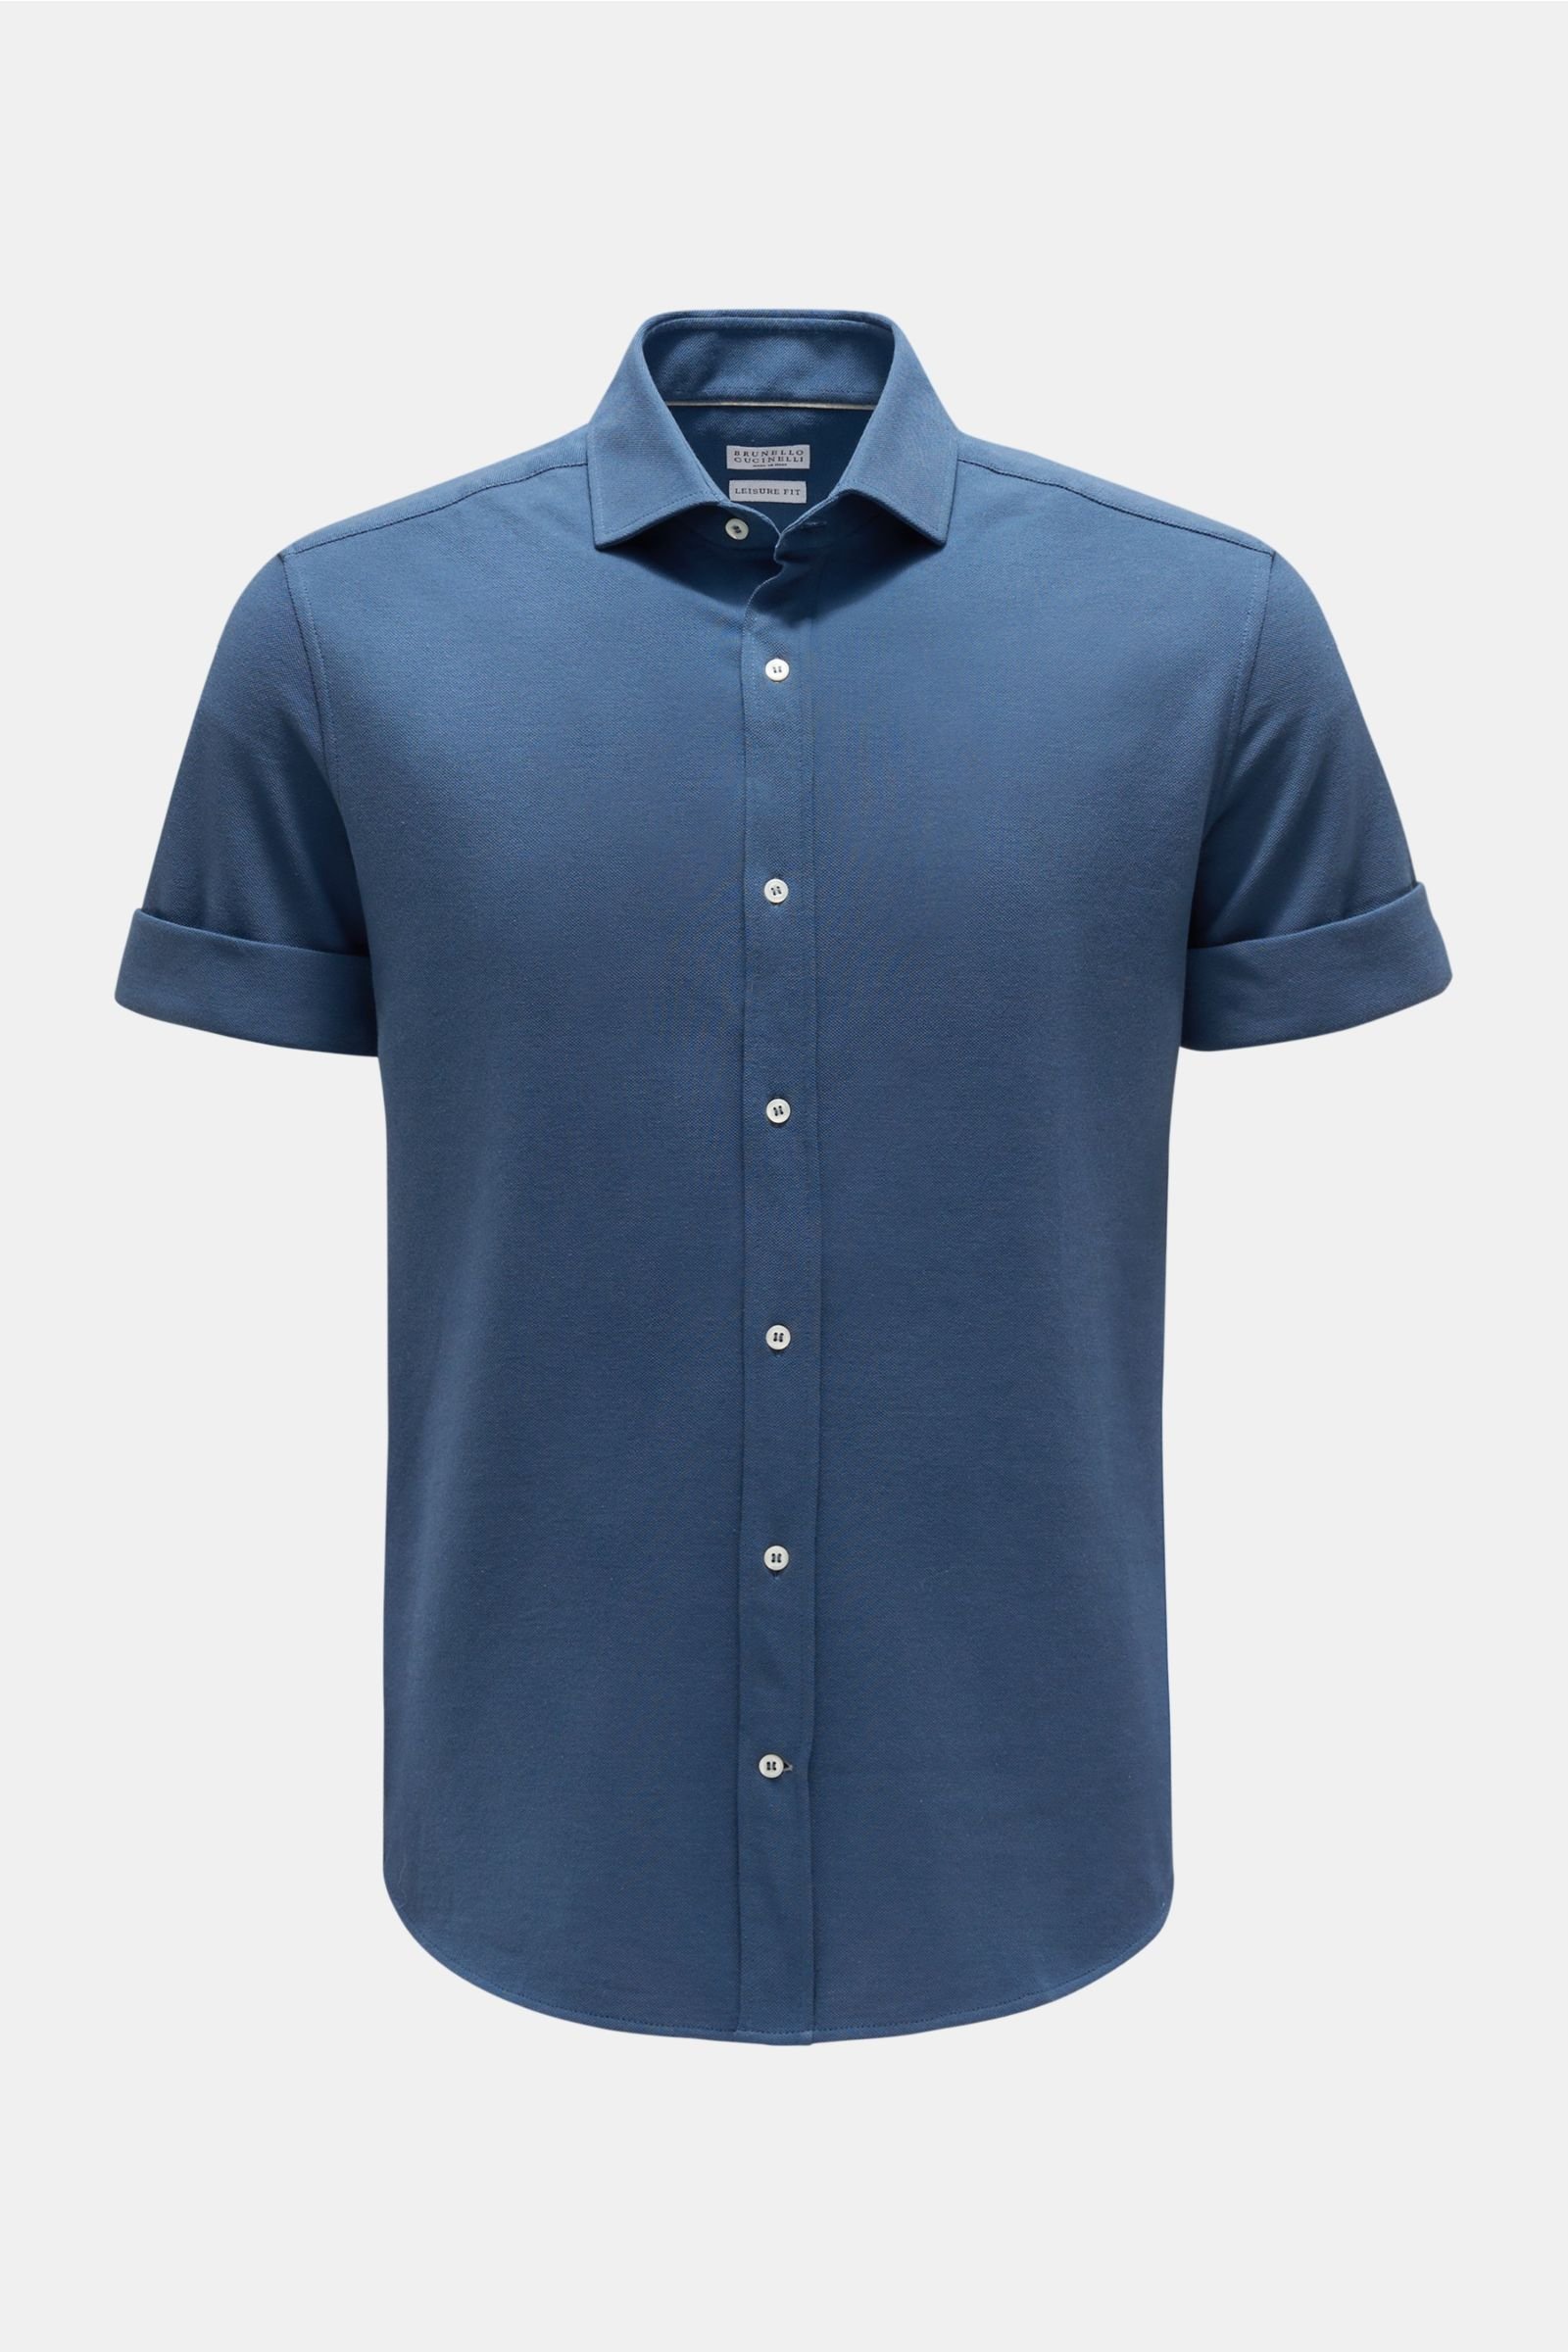 Jersey short sleeve shirt 'Leisure Fit' slim collar grey-blue